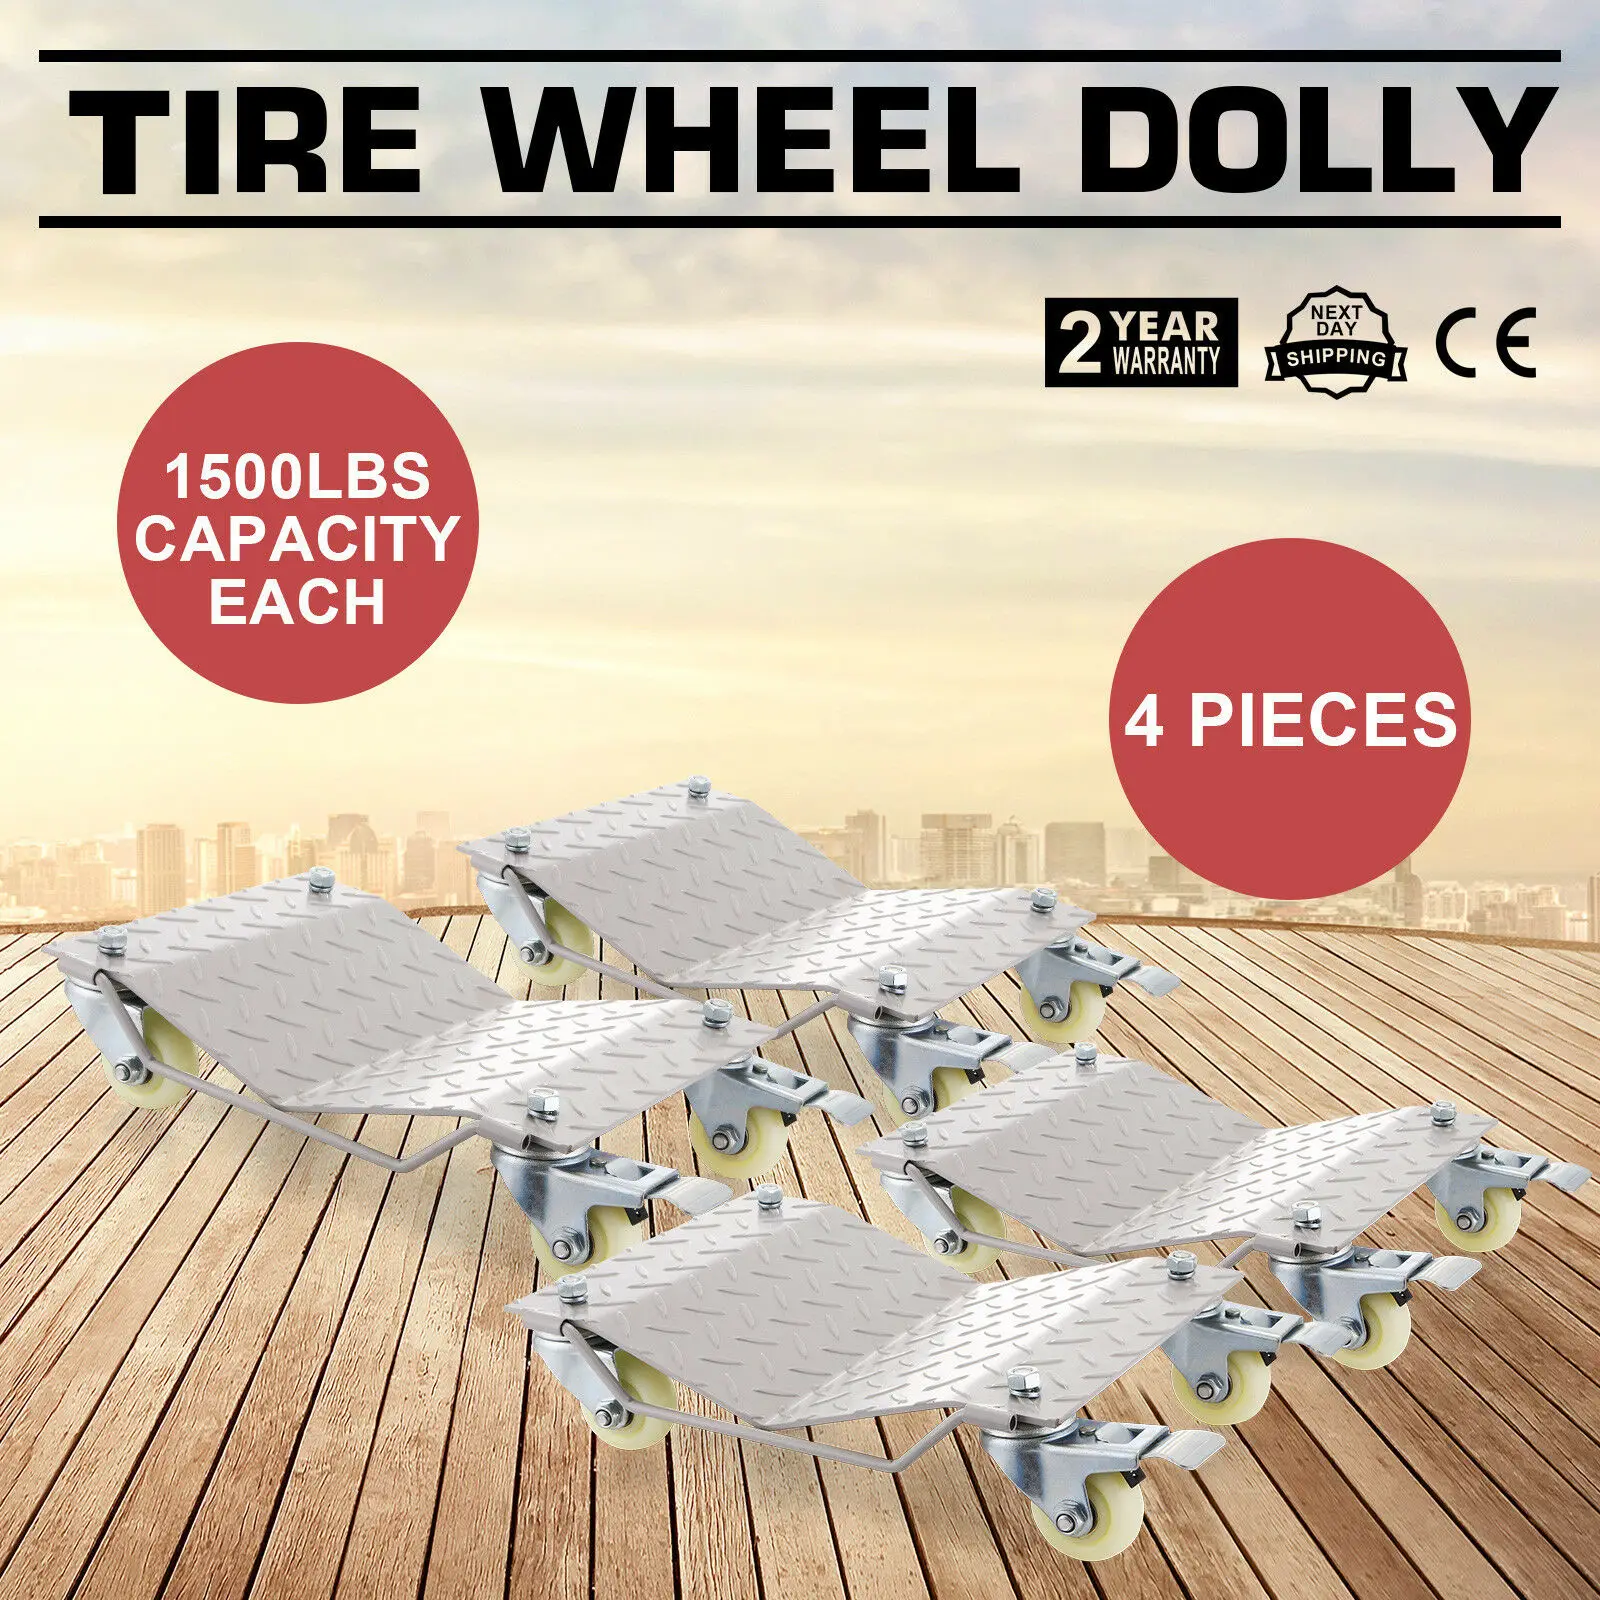 4 Auto Dolly Wheel Tire 12"x16" Skate Castor Vehicle Auto Car Repair Set of 